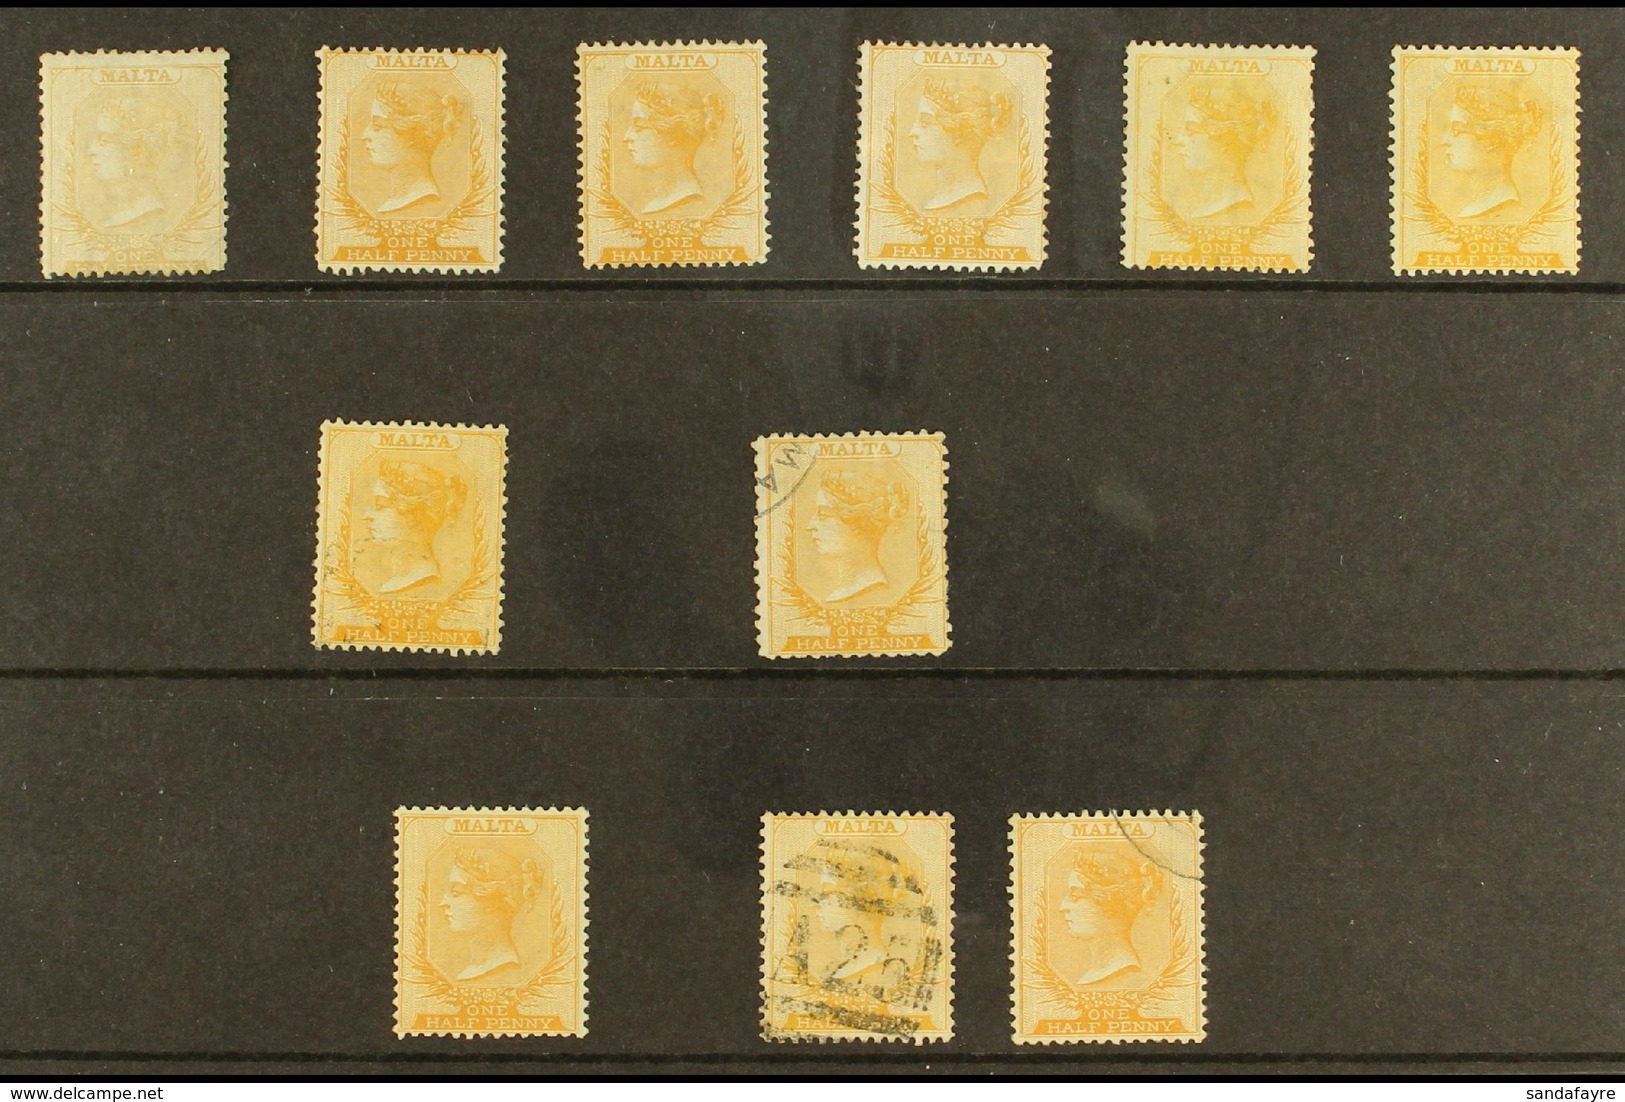 1863-1884 HALFPENNIES Nice Little Collection Comprising 1863-81(wmk Crown CC, Perf 14) ½d Mint Shades (6), Plus ½d Orang - Malta (...-1964)